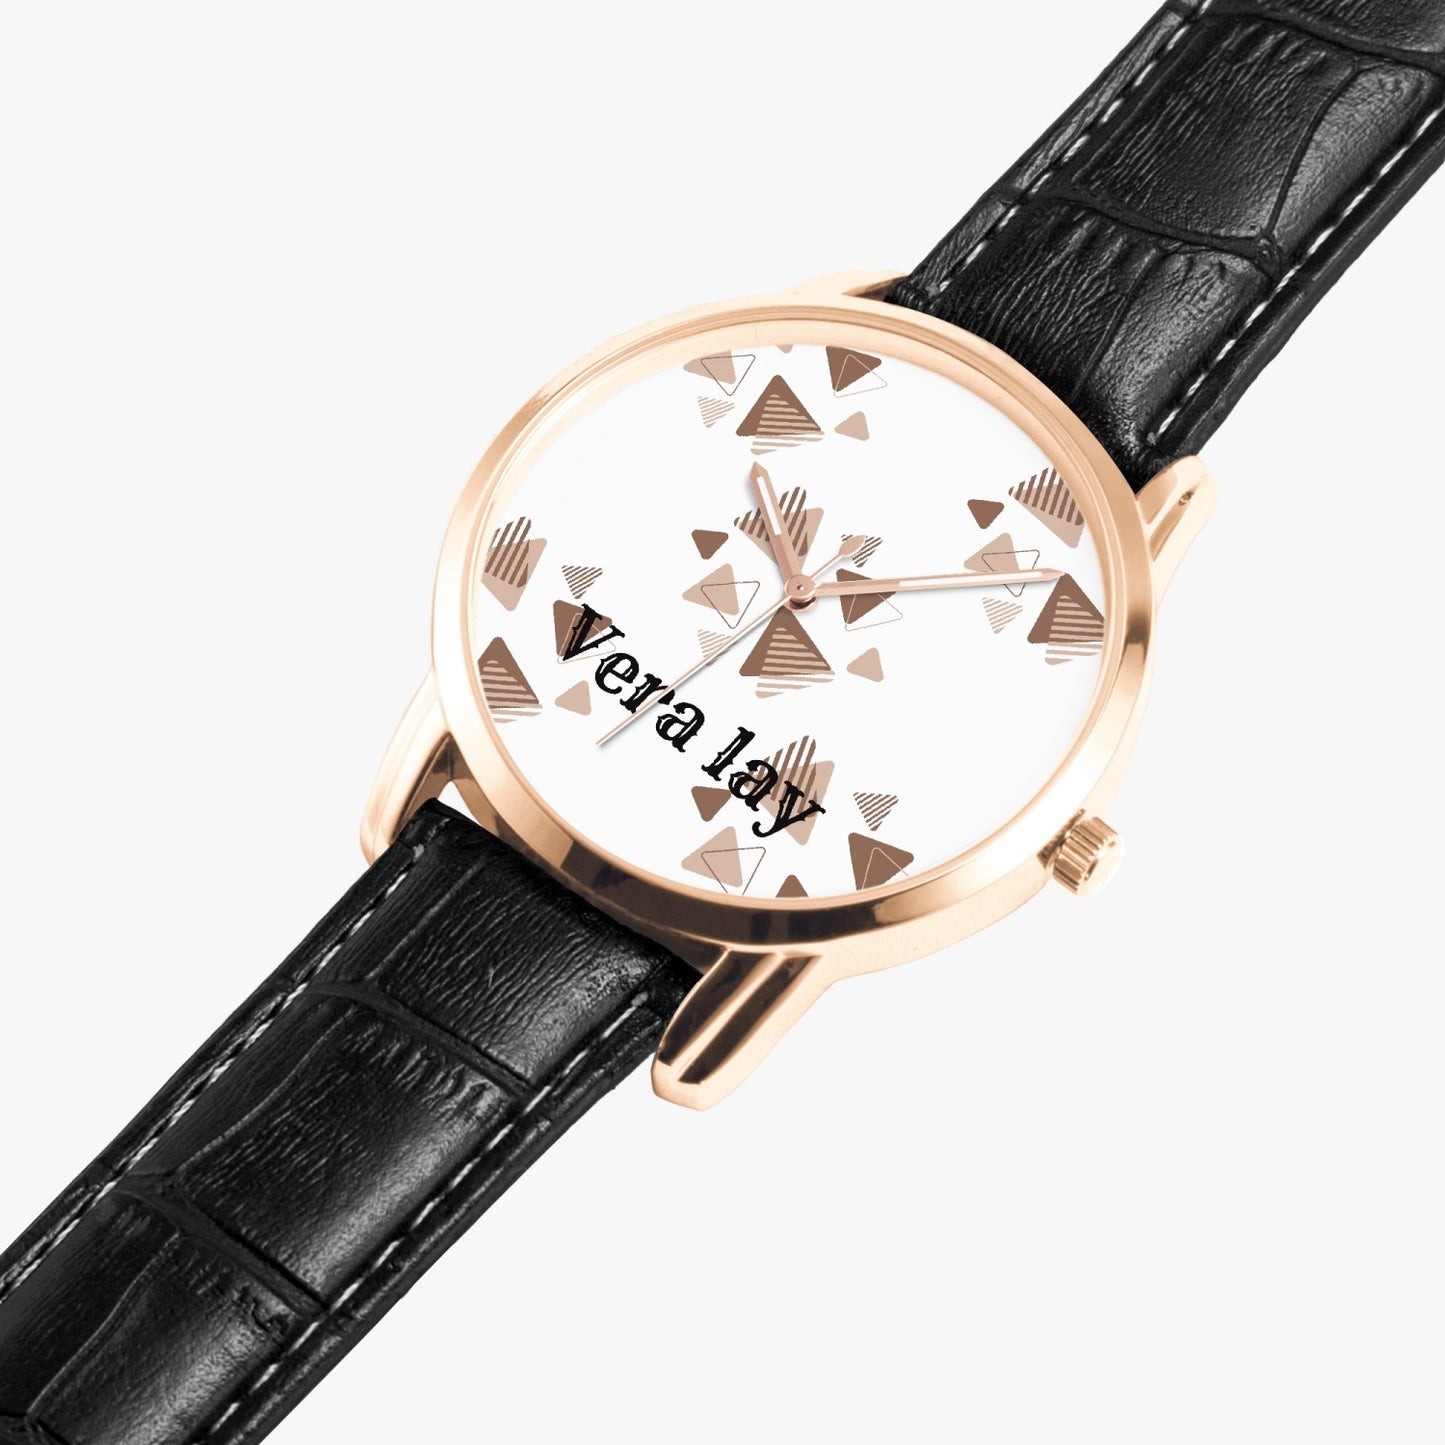 265. Instafamous Wide Type Quartz watch